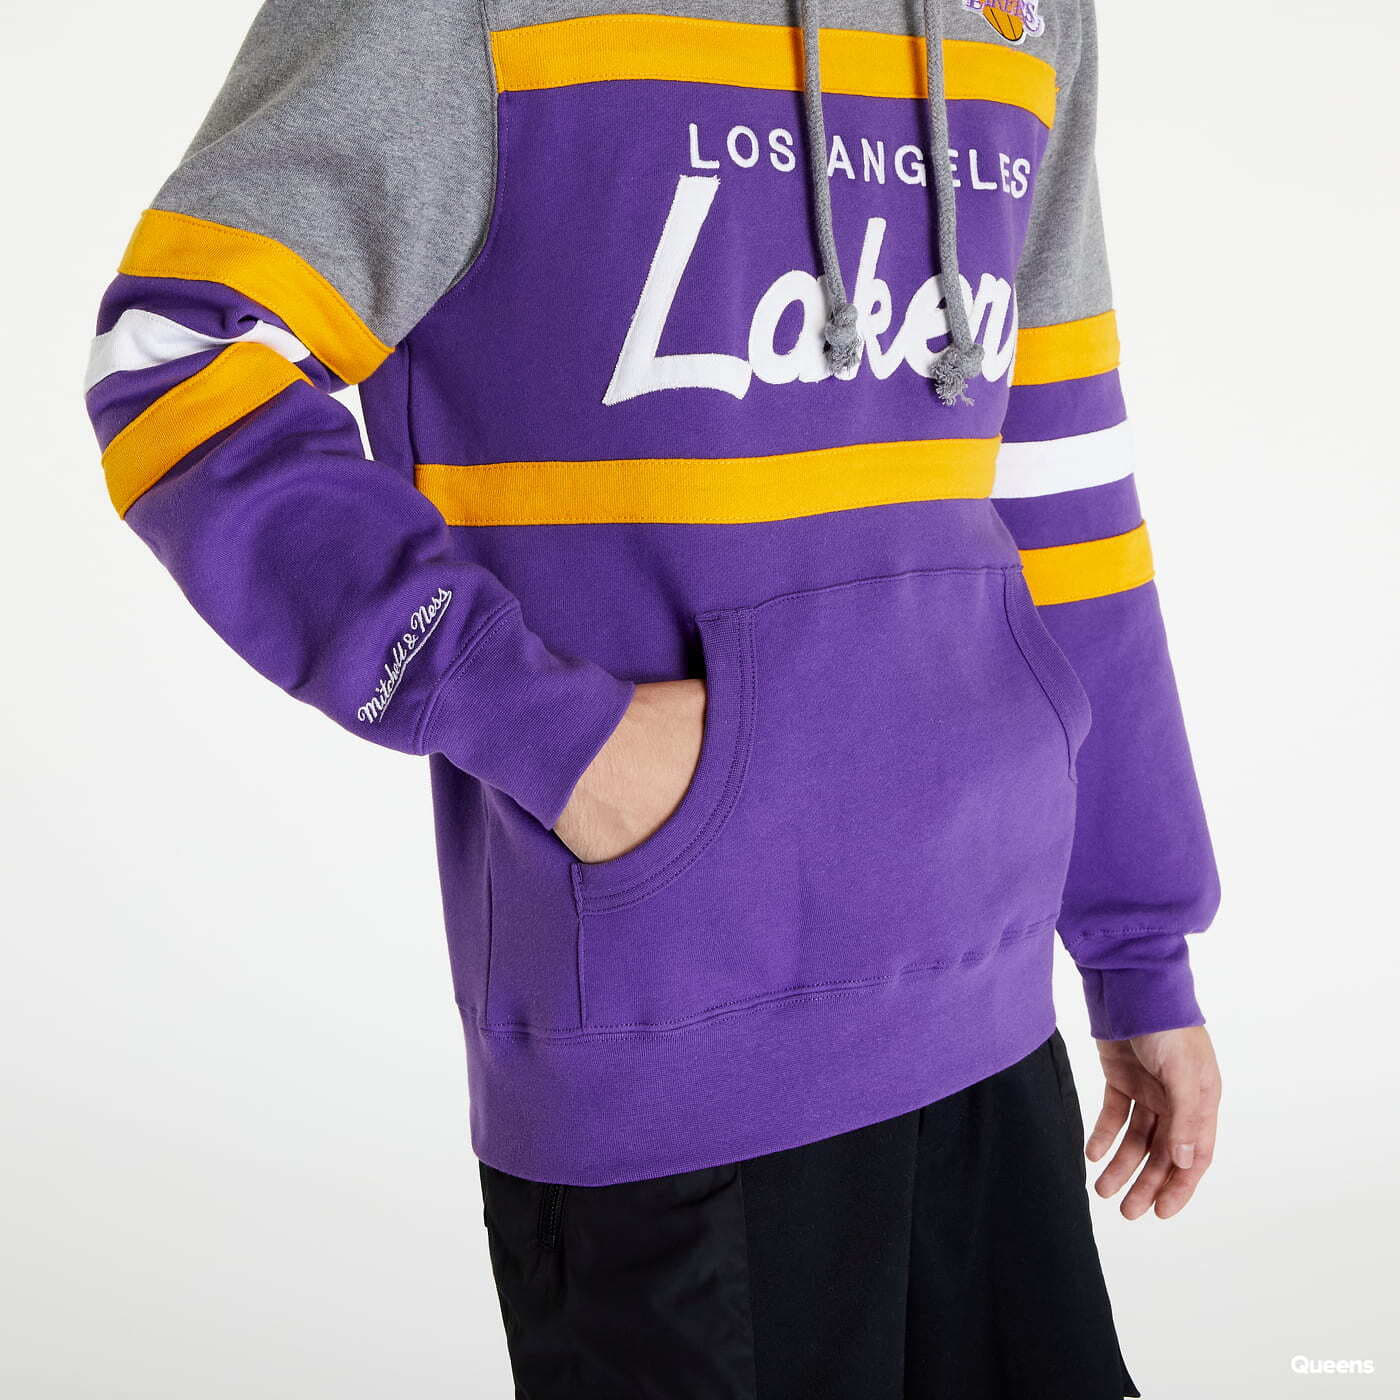 Mitchell & Ness sweatshirt Los Angeles Lakers NBA Team Logo Hoody grey